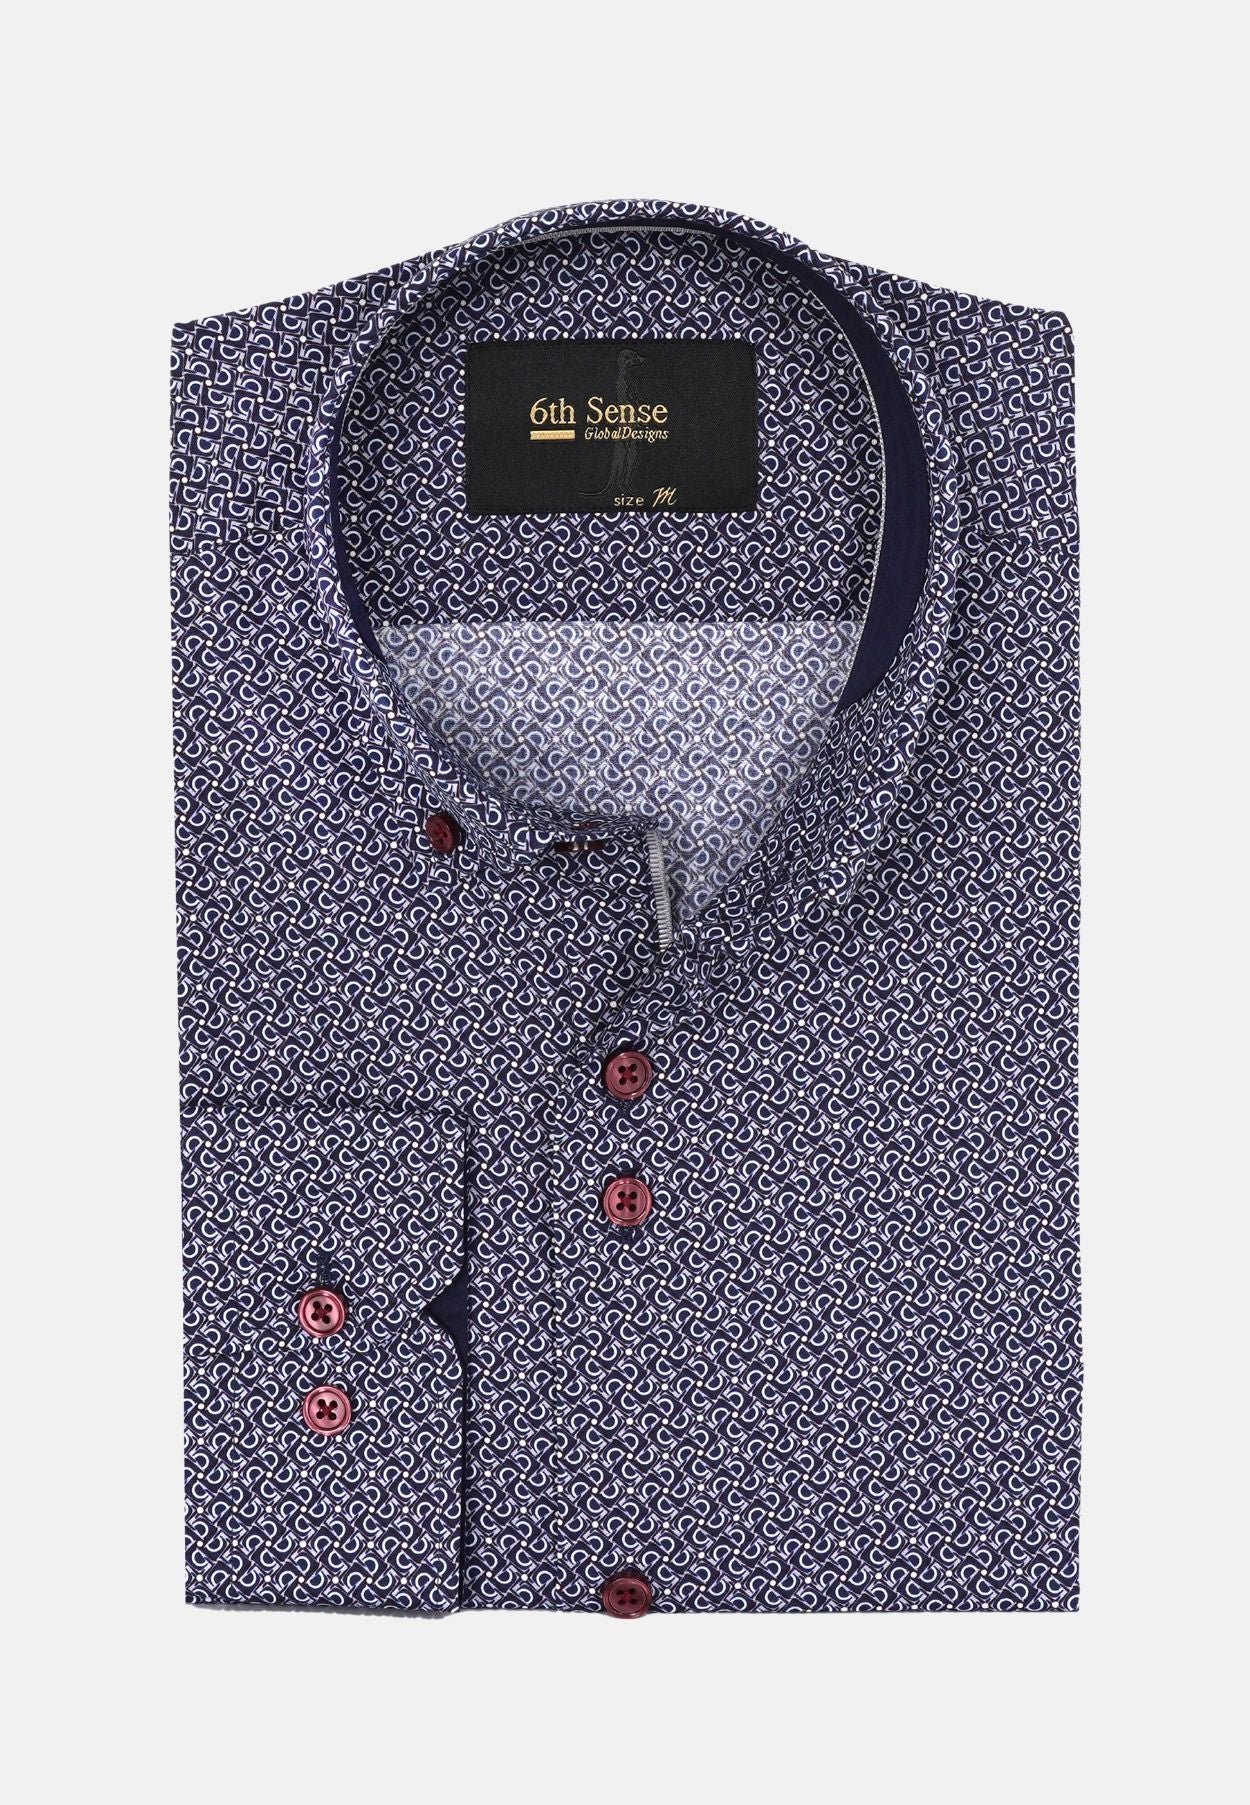 Men's Button Down Navy/Burgundy Print Shirt-Front View